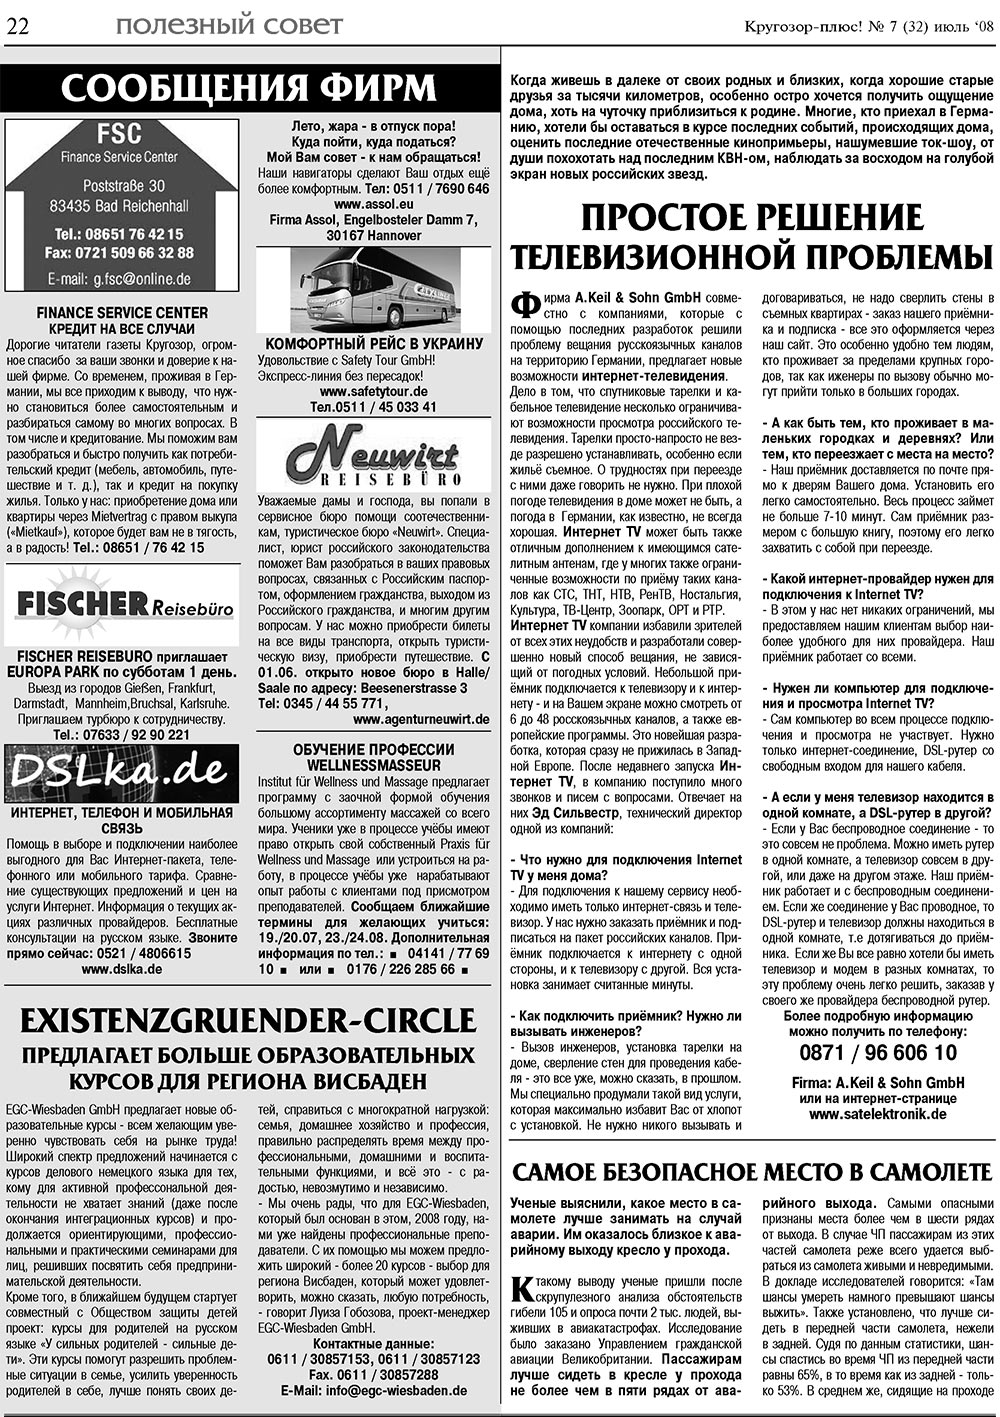 Кругозор плюс! (газета). 2008 год, номер 7, стр. 22